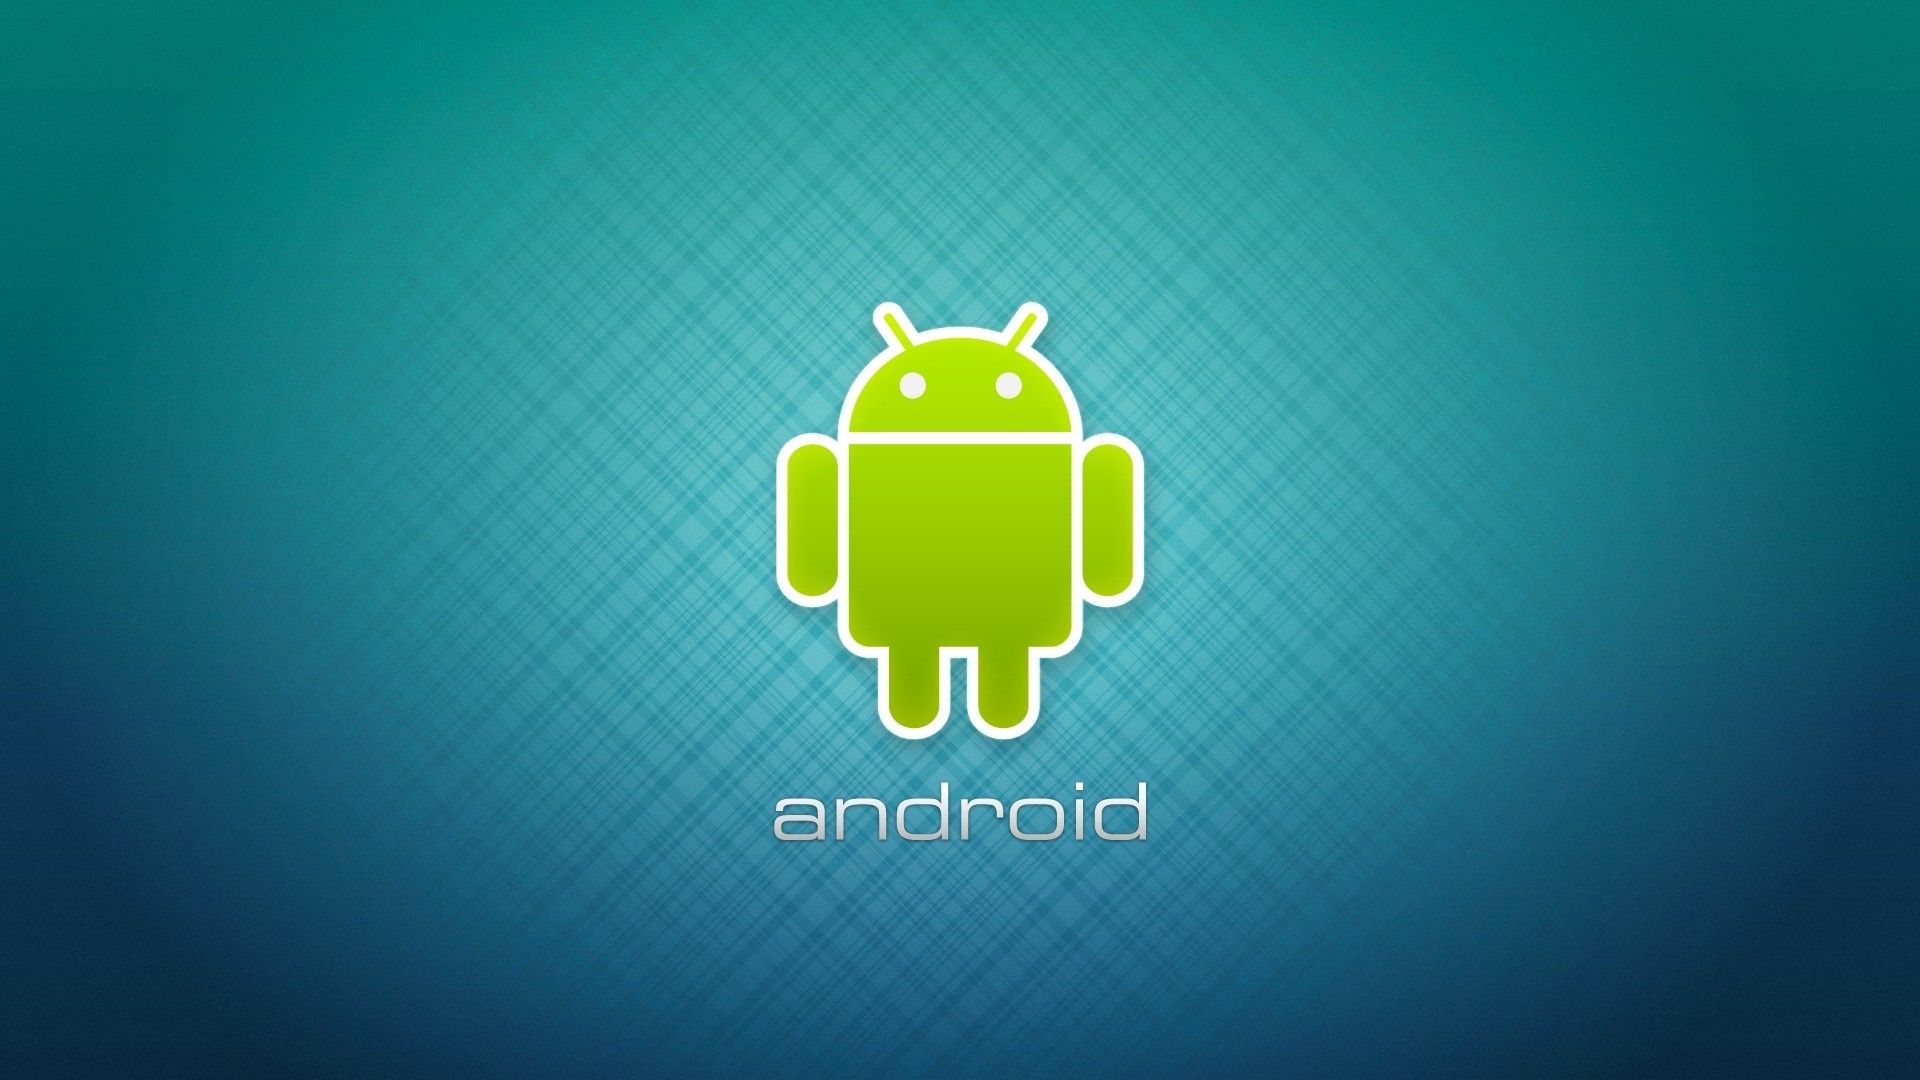 Google မှ Android ဖုန်းအသုံးပြုသူများကို Application များမှတဆင့် tracking ပြုလုပ်နေခြင်းအား ပိုမိုခက်ခဲလာစေရန် ပြုလုပ်ပေးတော့မည်ဖြစ်